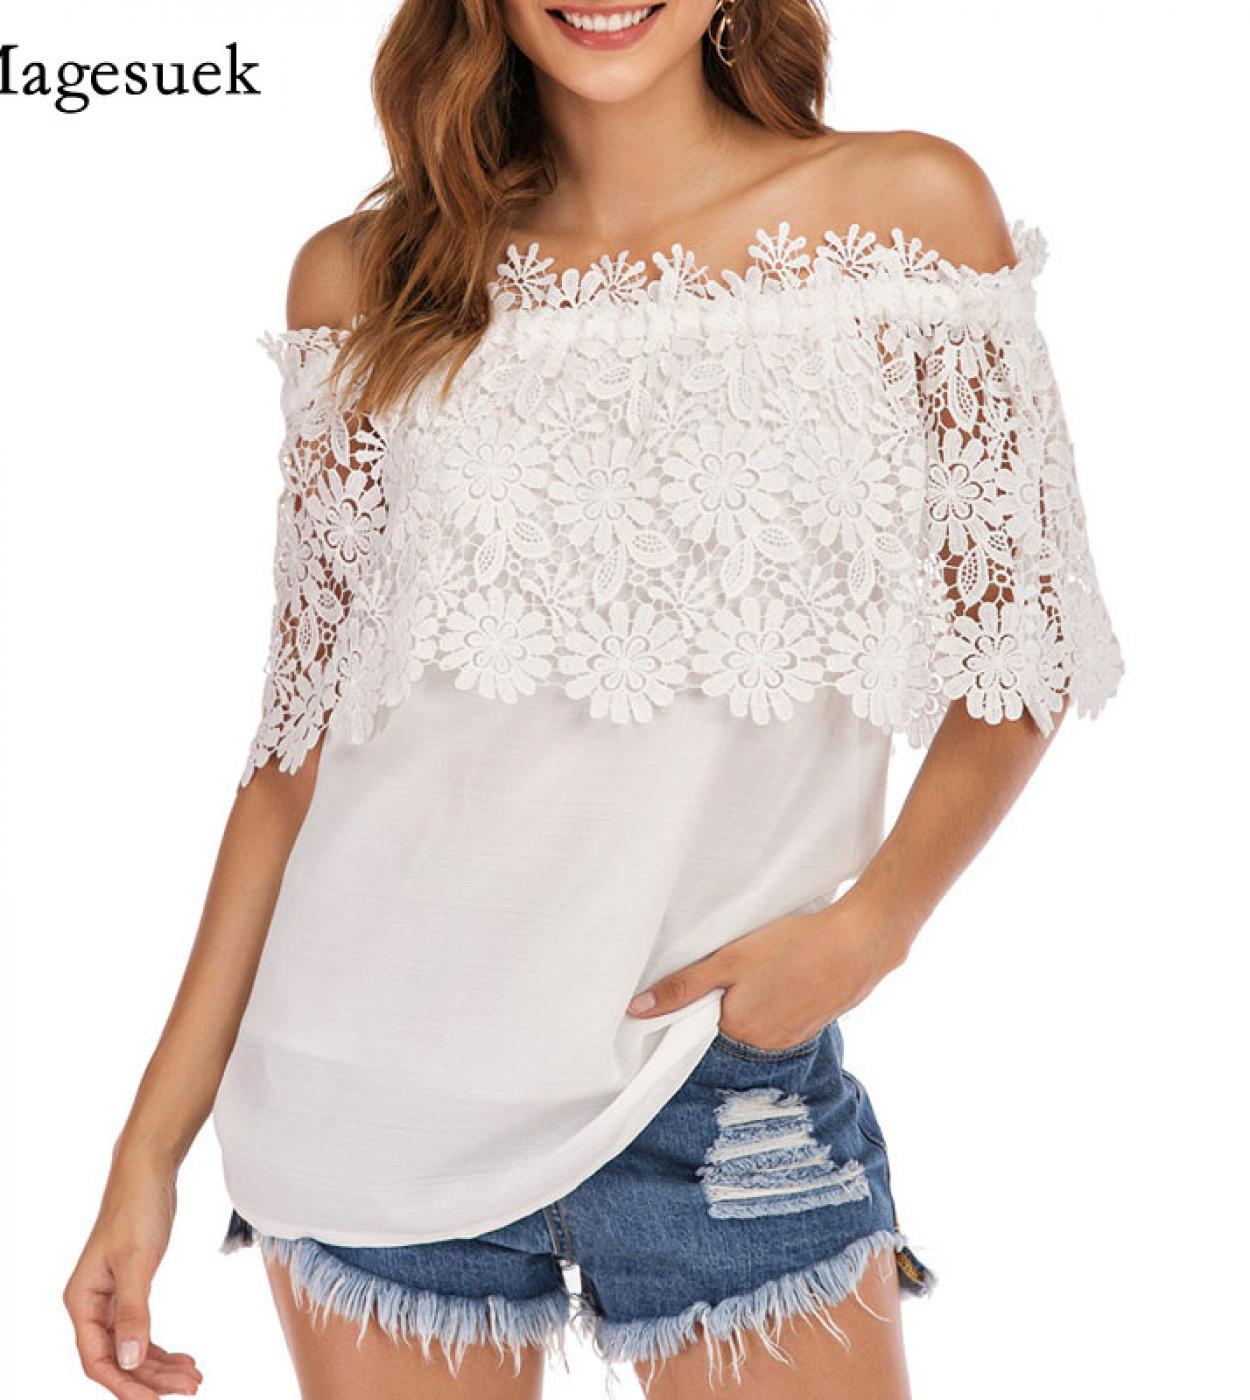  Slash Collar White Blouse  Summer New Crochet Lace Sweet Shirt Cotton Cold Shoulder Chiffon Tops Blusas De Seda 14128  